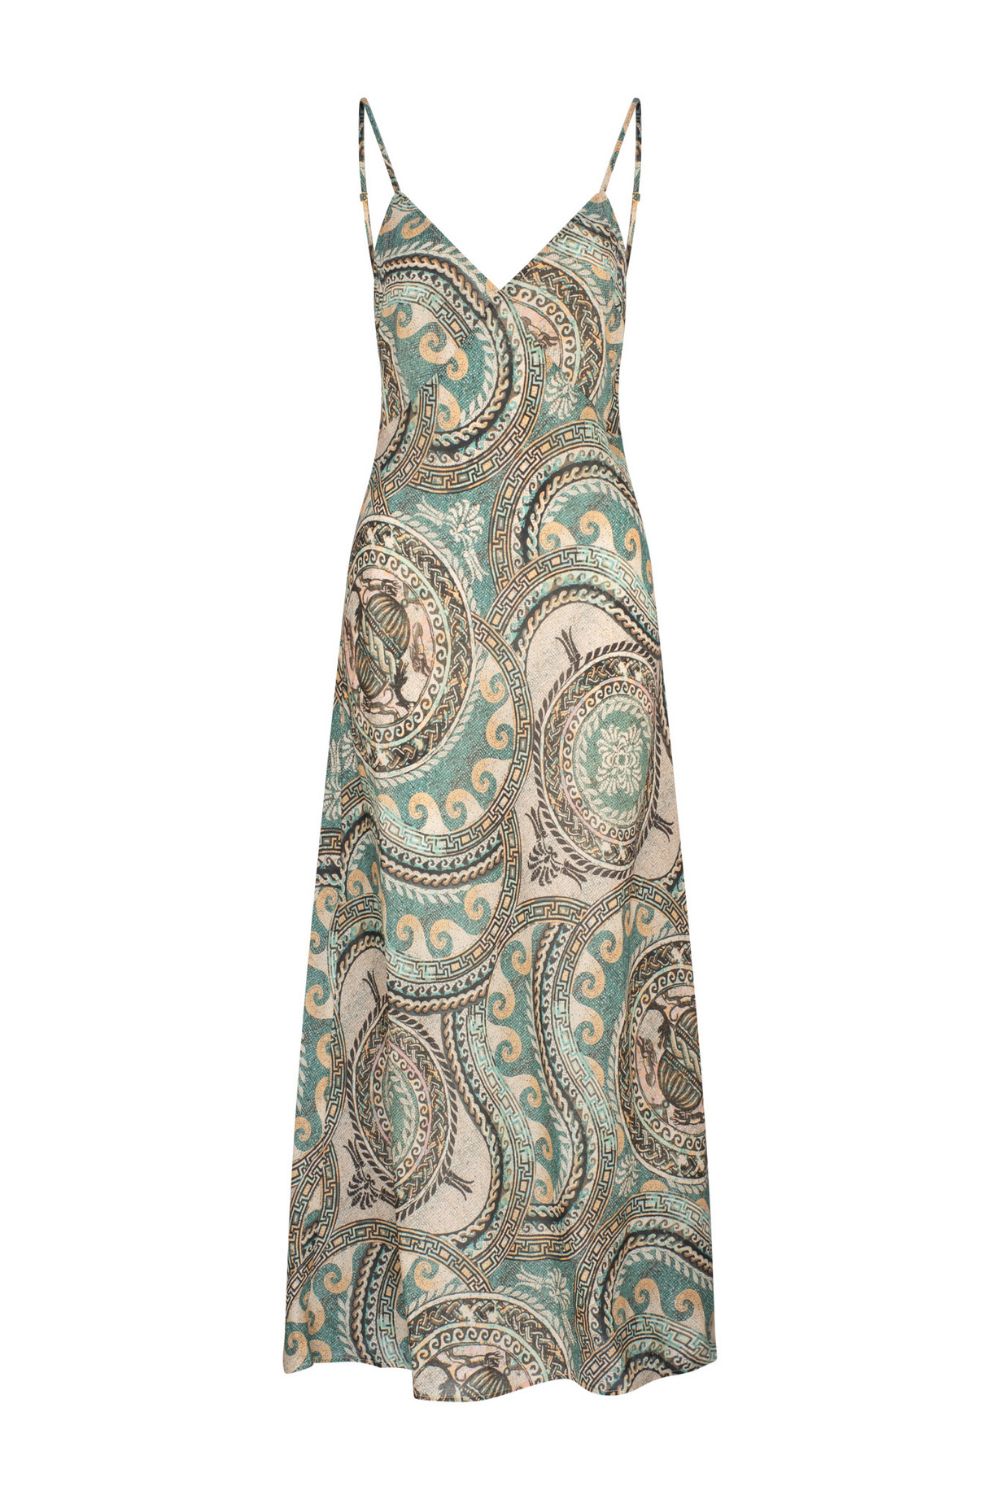 Buy Capri Luxe Summer Dress in Blue for Women Online in India